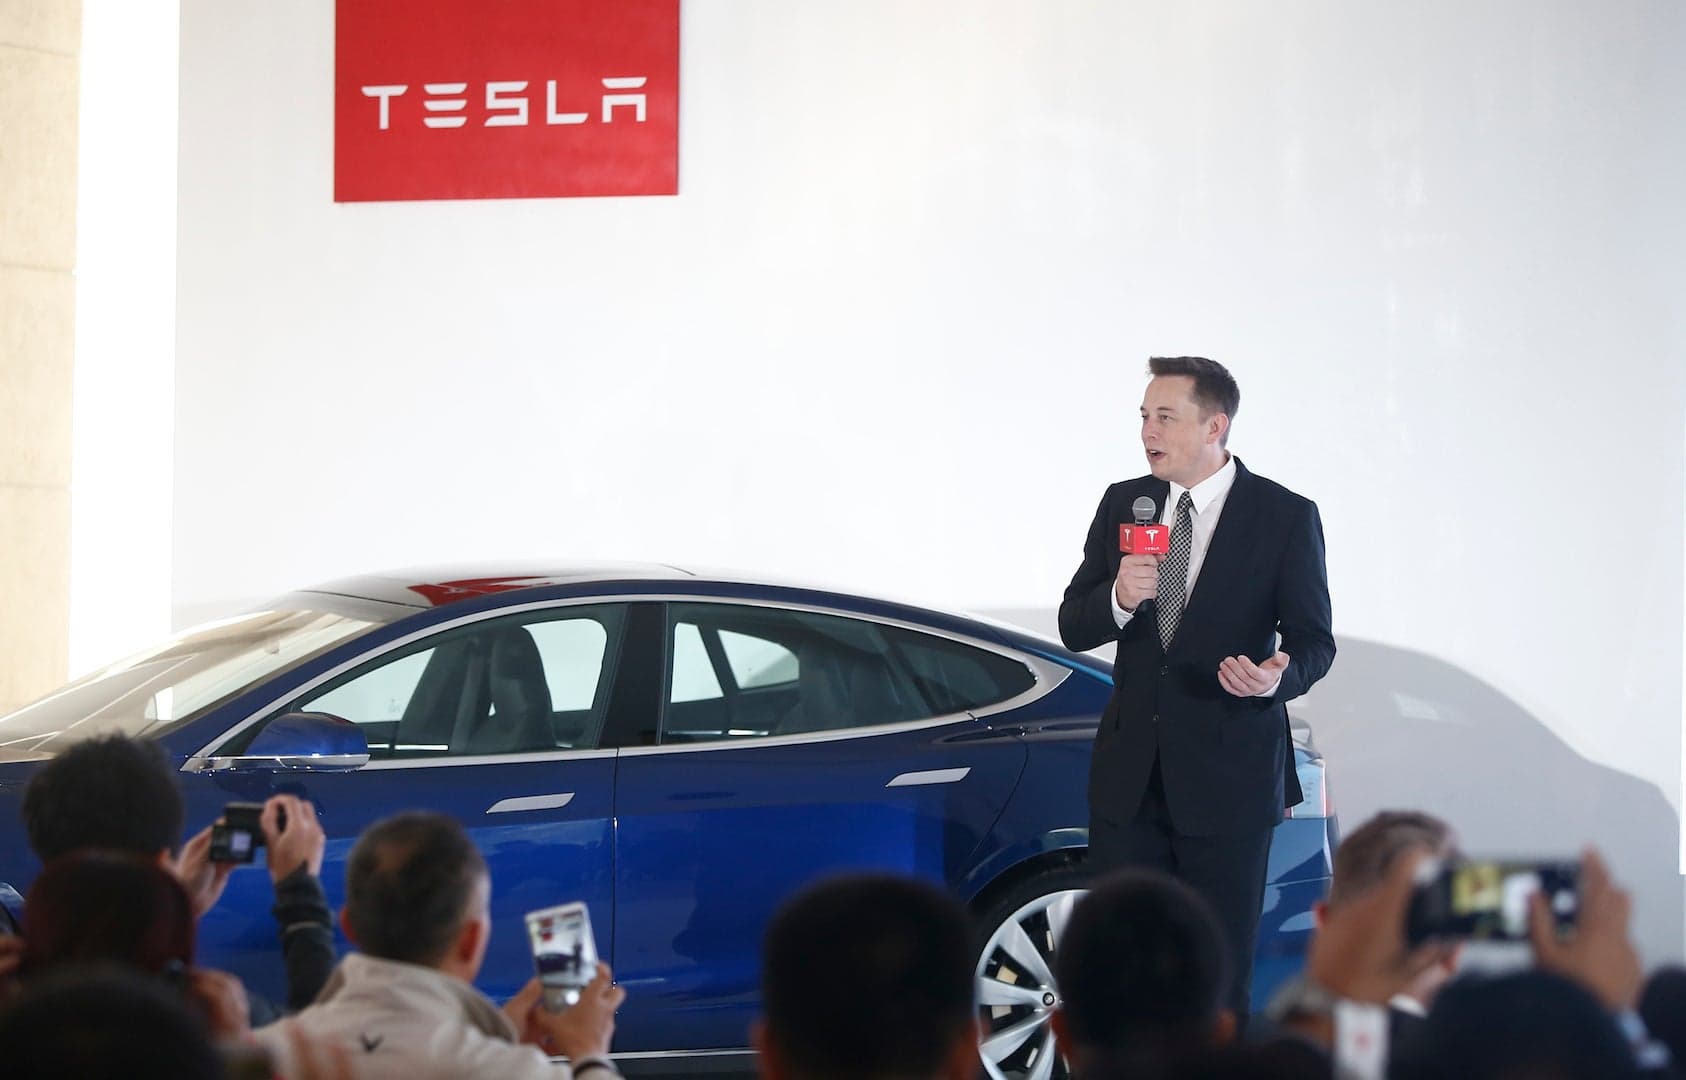 Tesla Has Raised $1.2 Billion Prior to Model 3 Launch